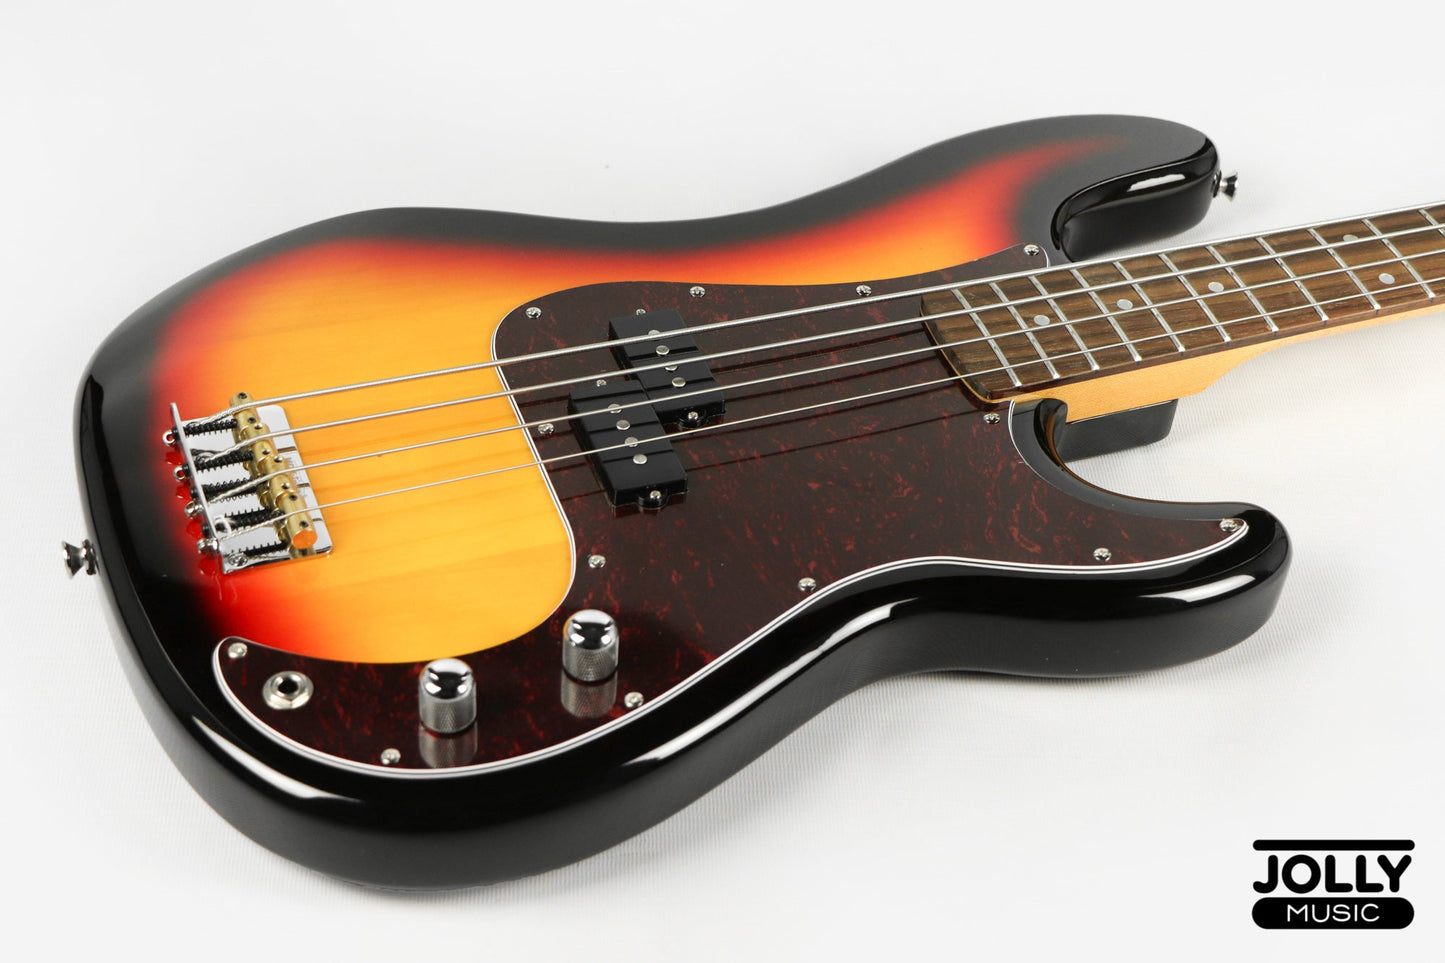 JCraft PB-3V 4-String Bass Guitar - Sunburst